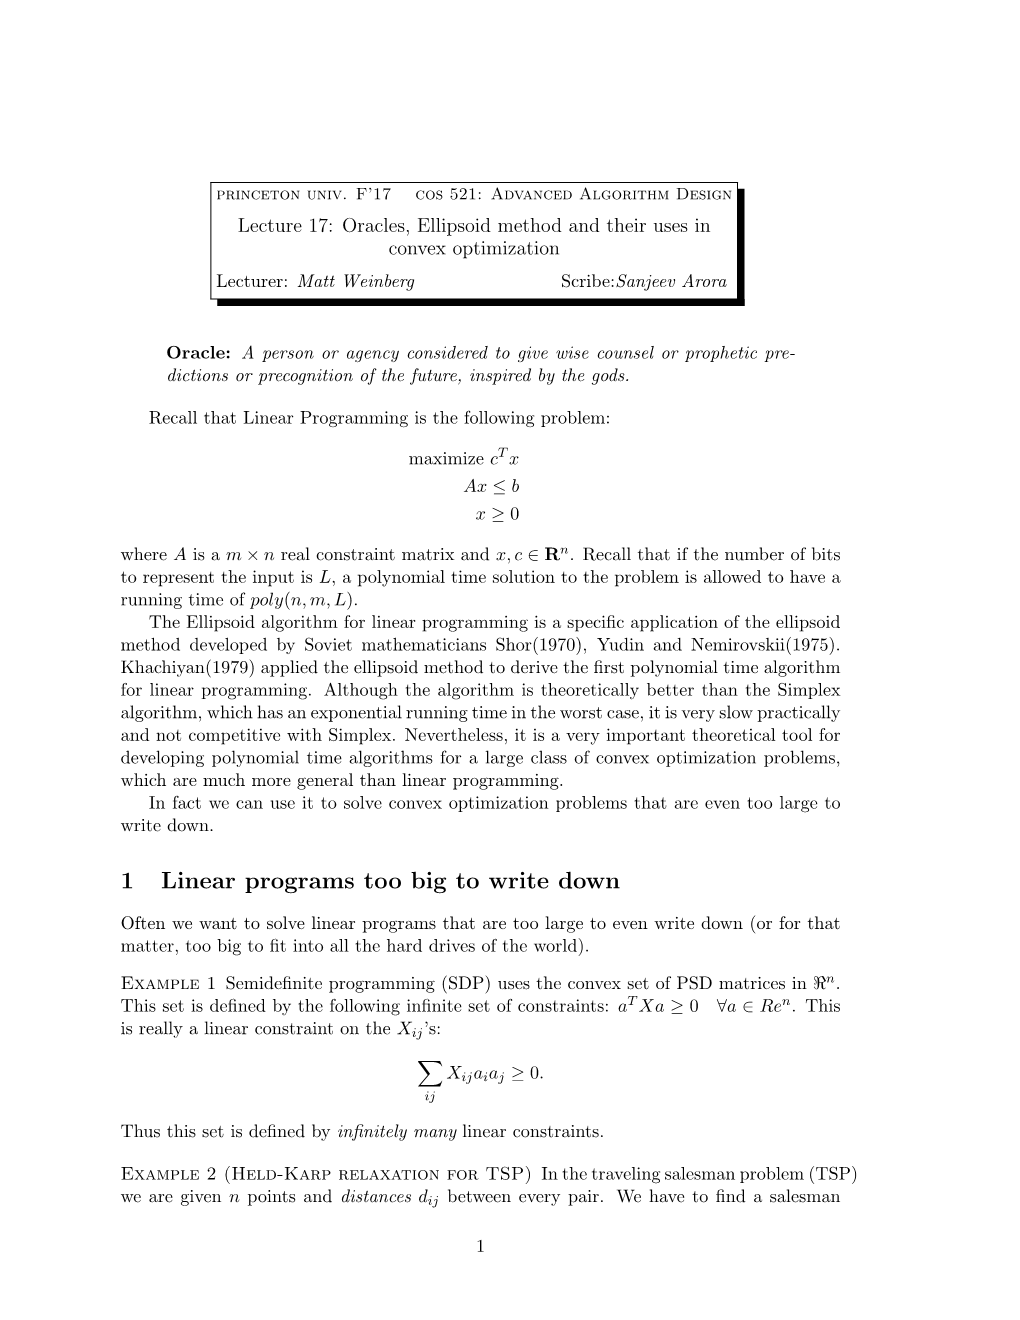 Oracles, Ellipsoid Method and Their Uses in Convex Optimization Lecturer: Matt Weinberg Scribe:Sanjeev Arora